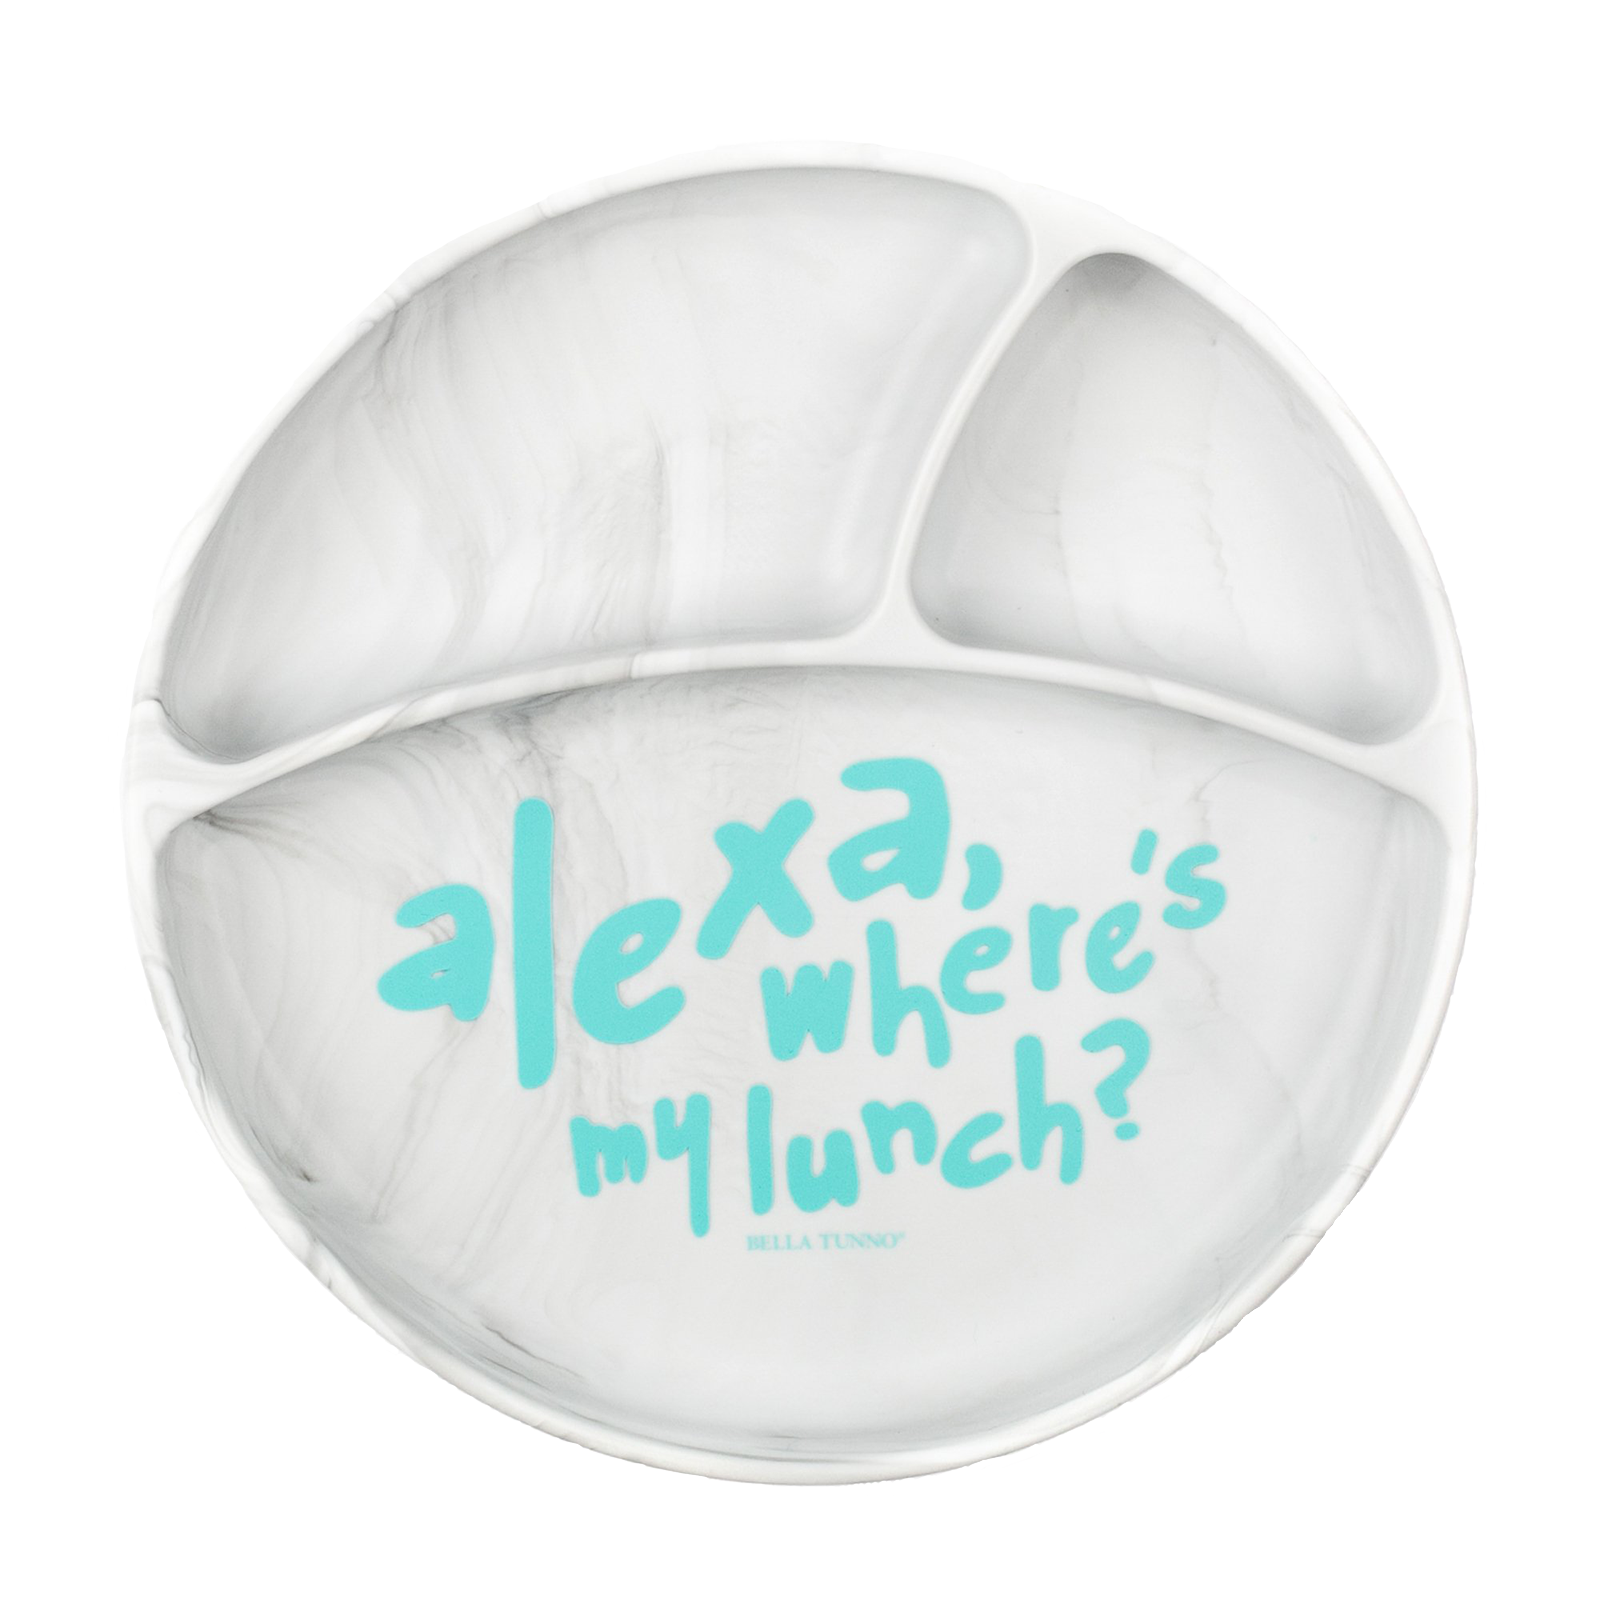 'Alexa, Where's My Lunch?' Wonder Plate